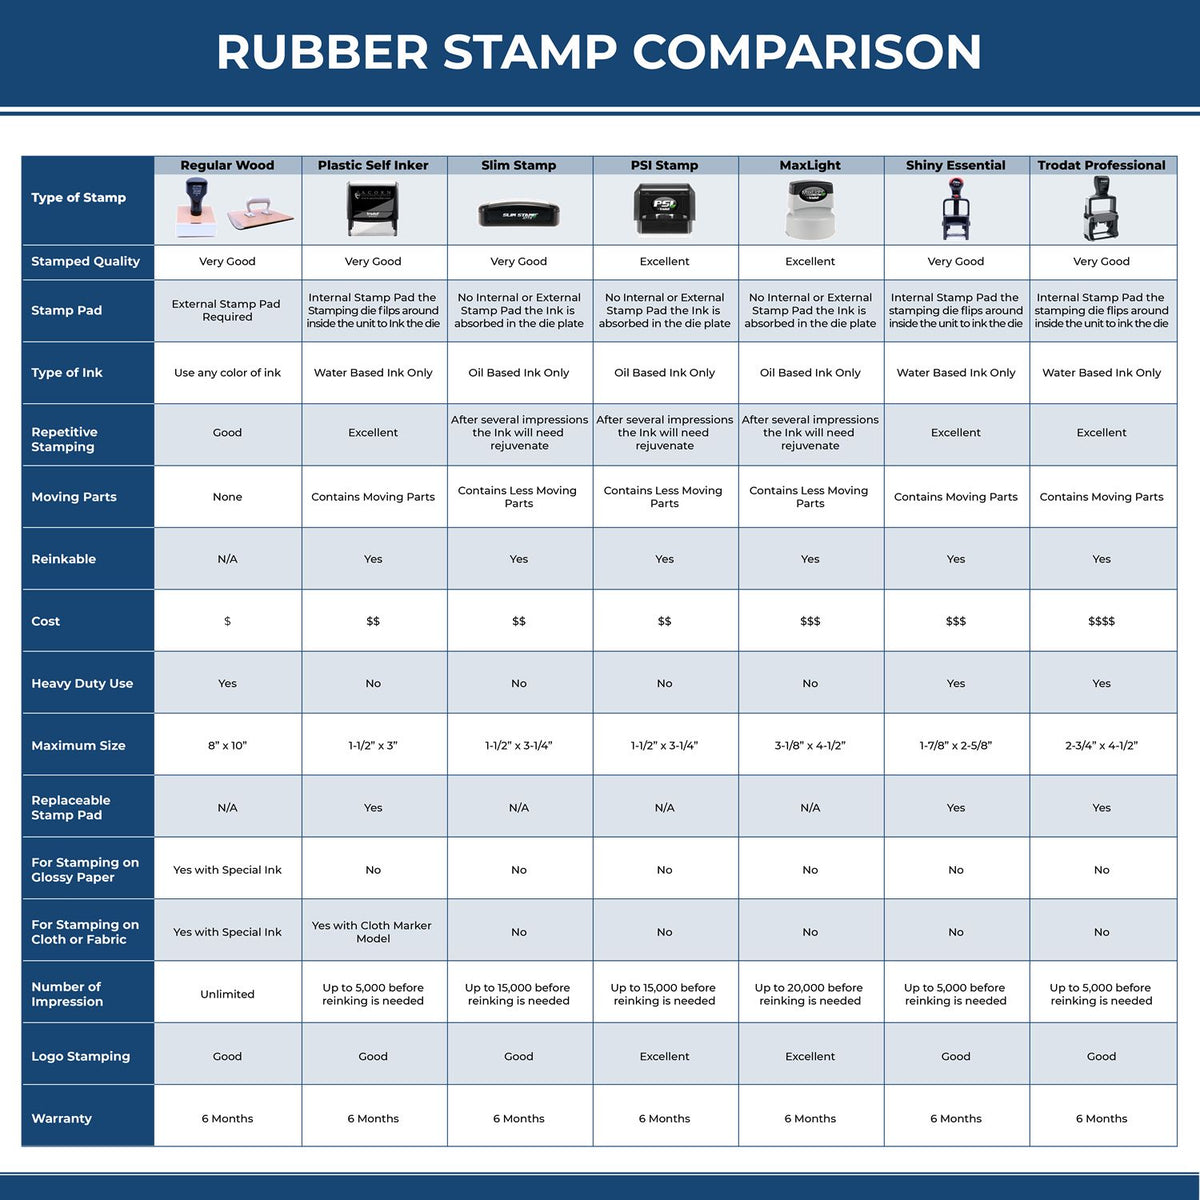 Read Route Rubber Stamp 4366R Rubber Stamp Comparison